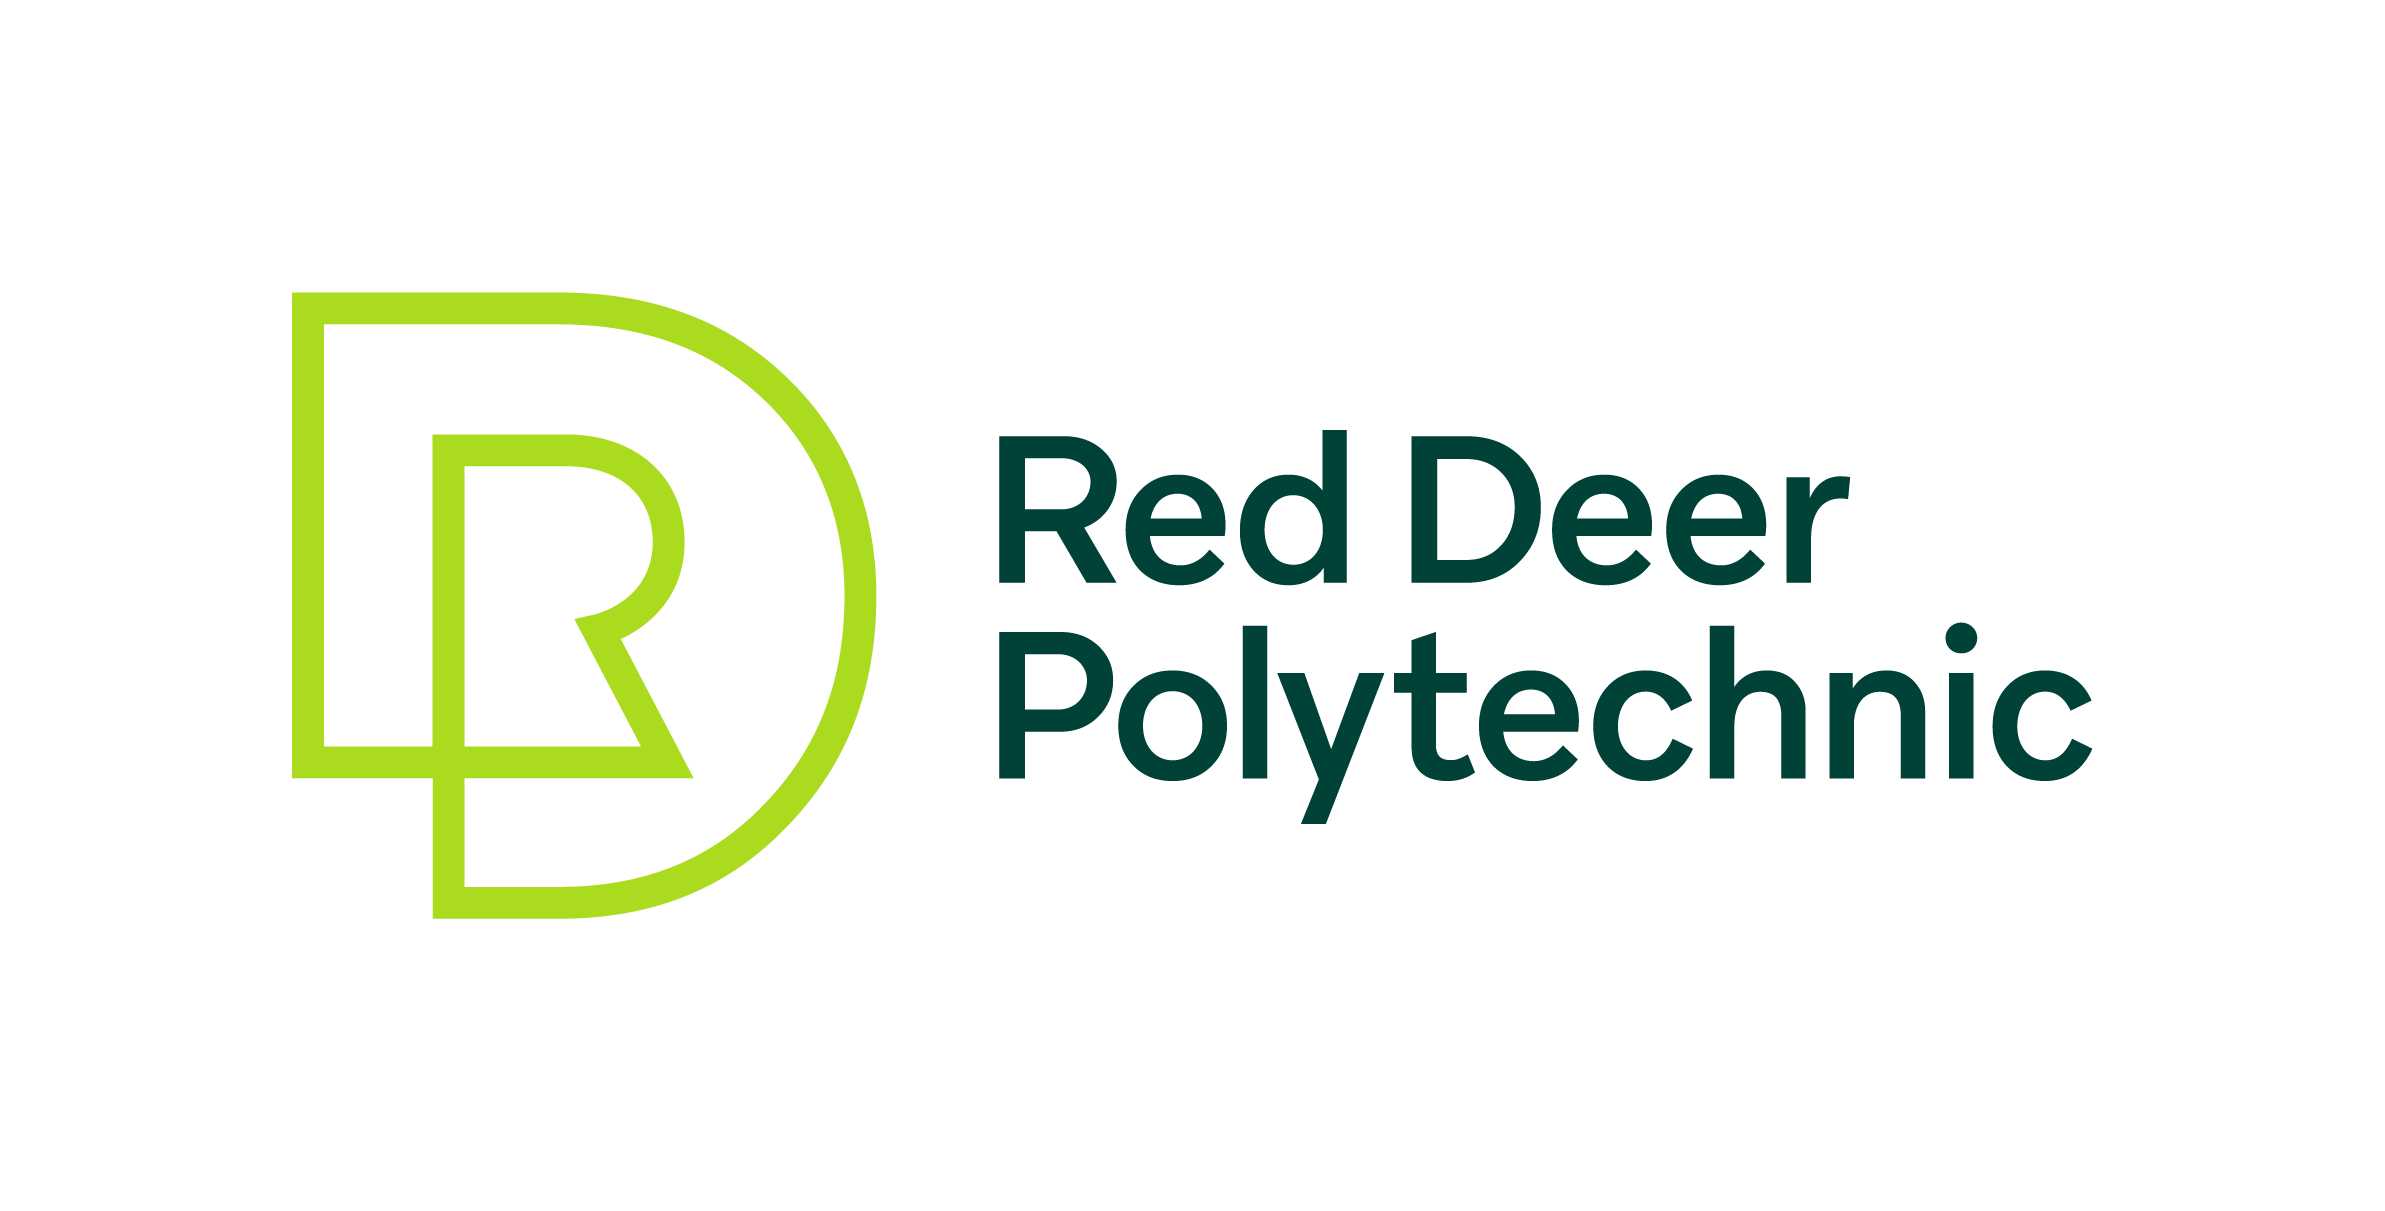 Red Deer Polytechnic Testing Services  Event Registration